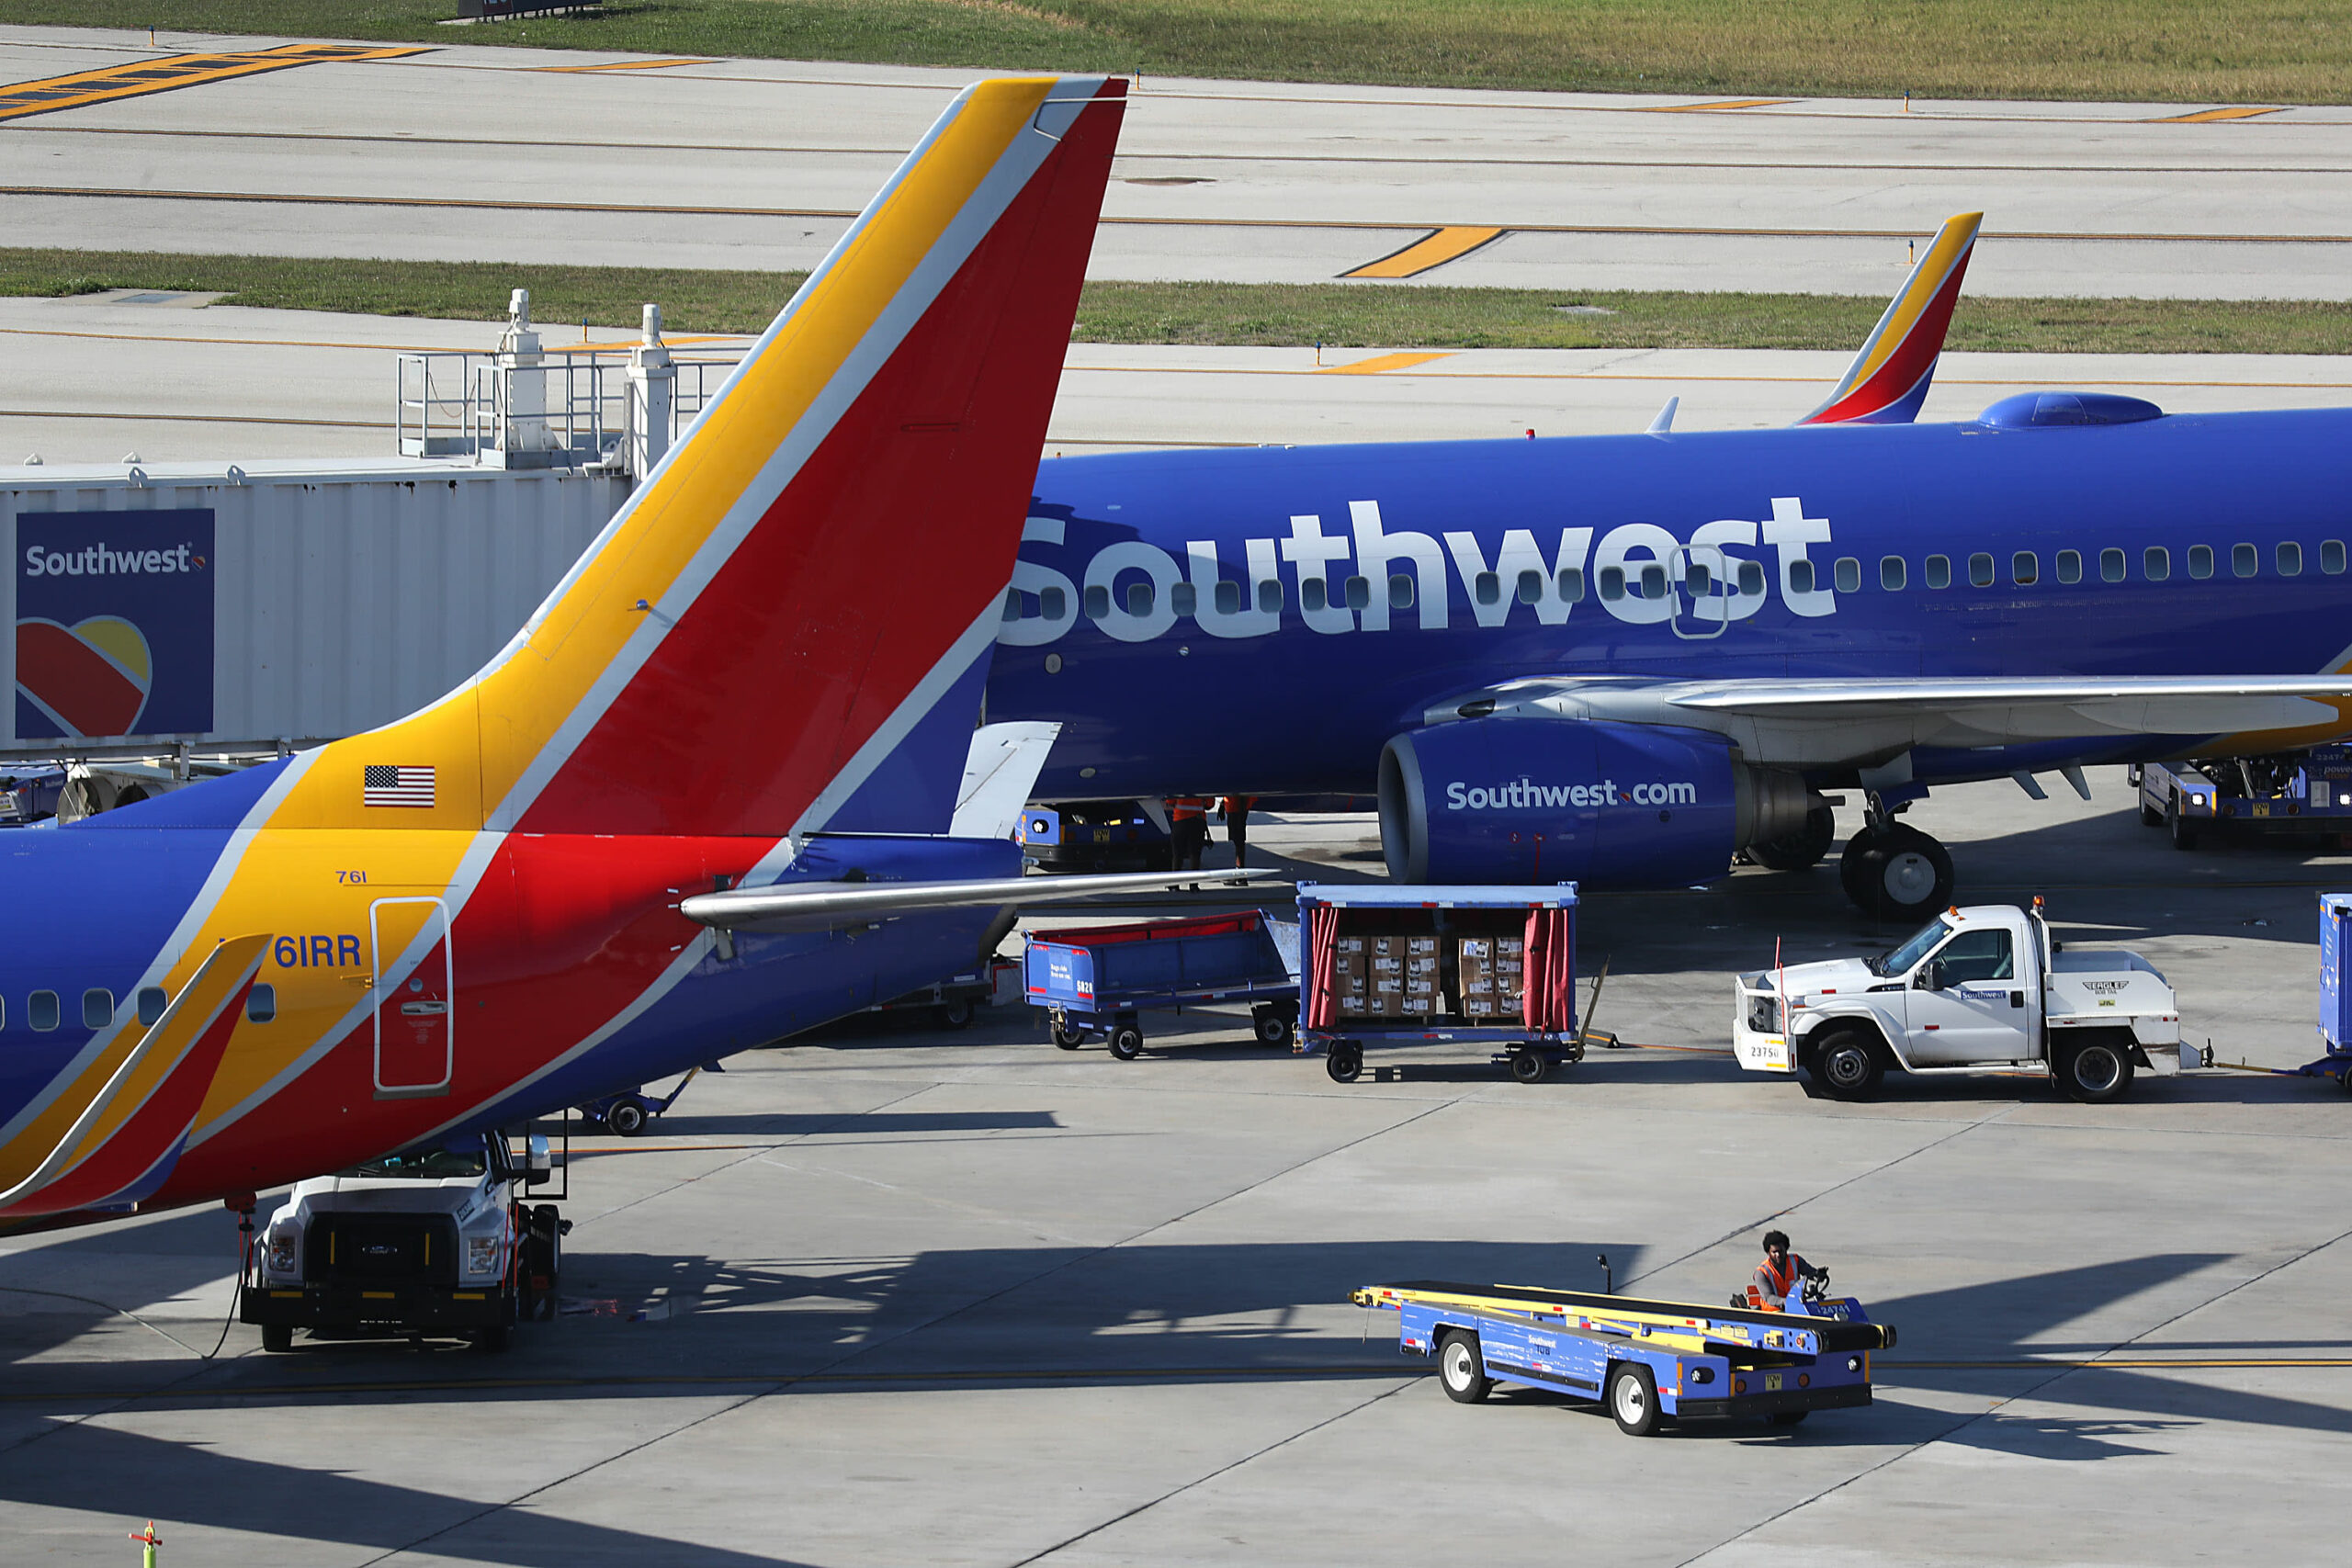 Southwest Airways (LUV) posts Q2 decline, warns on weak demand because of coronavirus